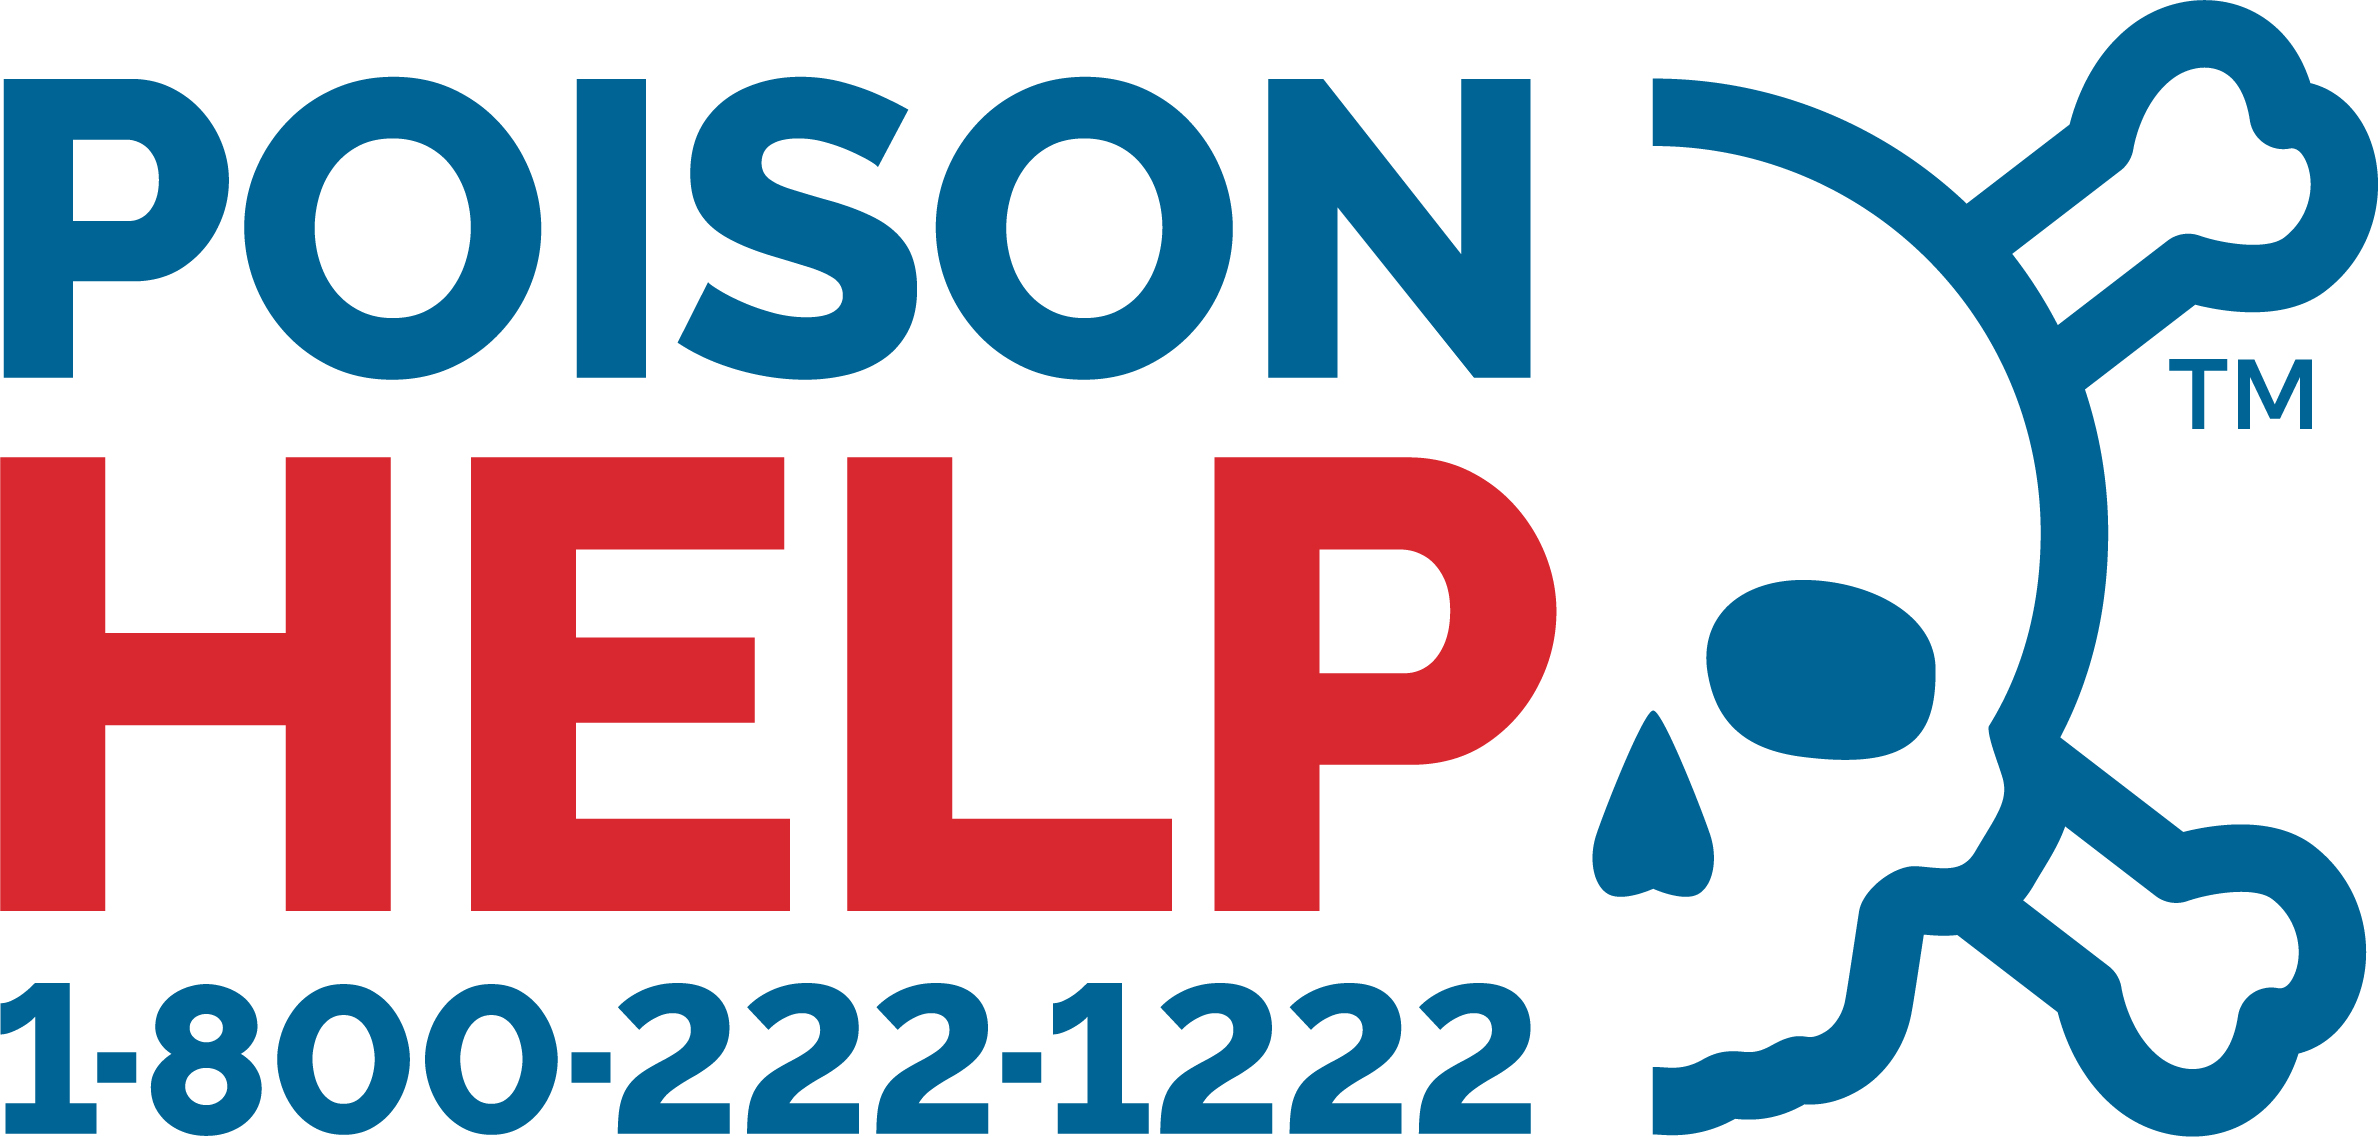 Poison Help logo 2022